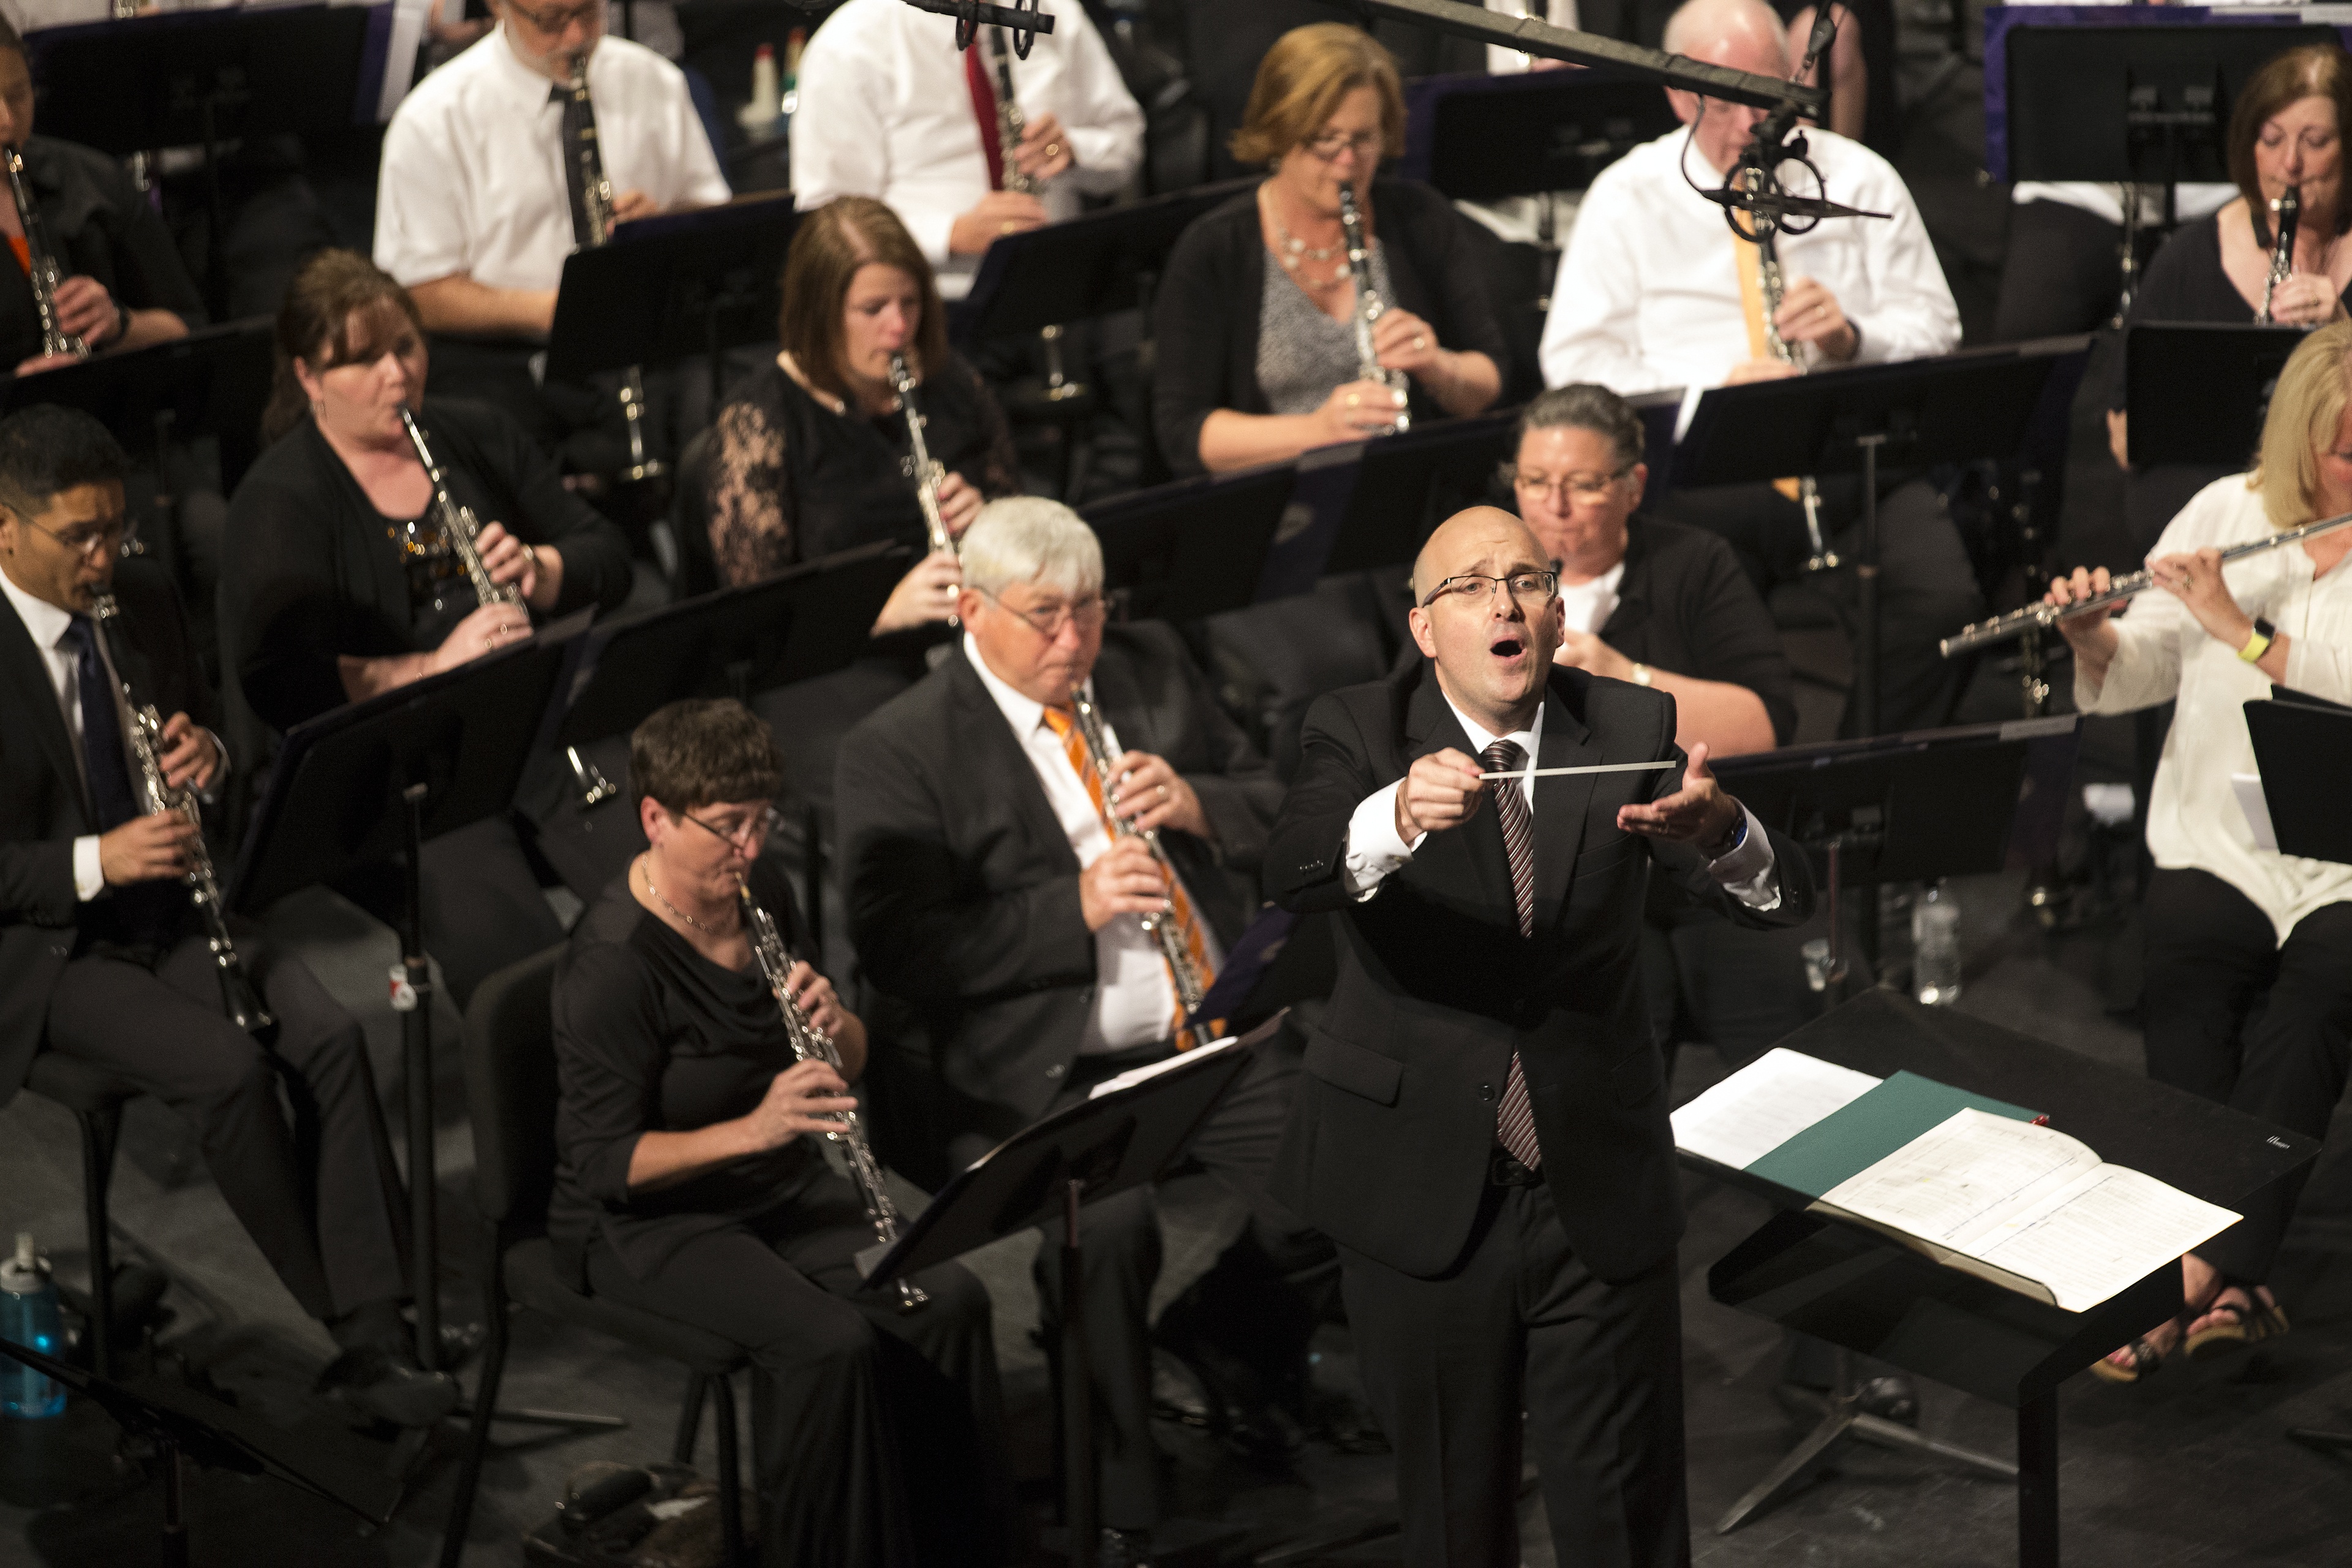 Lt. Col. Ryan Nowlin conducts the Alumni Symphonic Band ensemble 